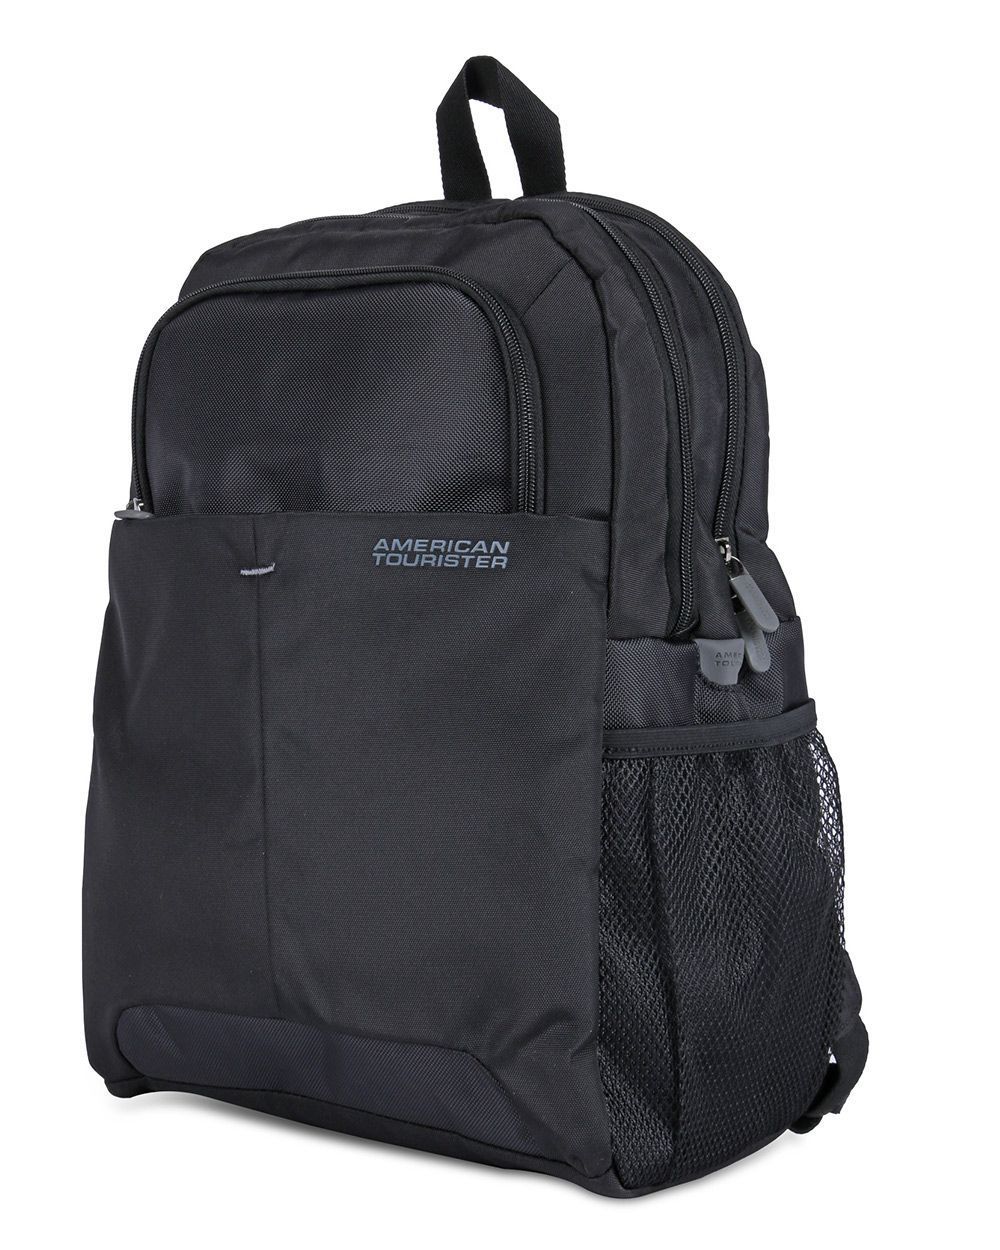 American Tourister Speedair Unisex Black Backpack | Buy Backpacks online |  Best price and offers | KSA | HNAK.com